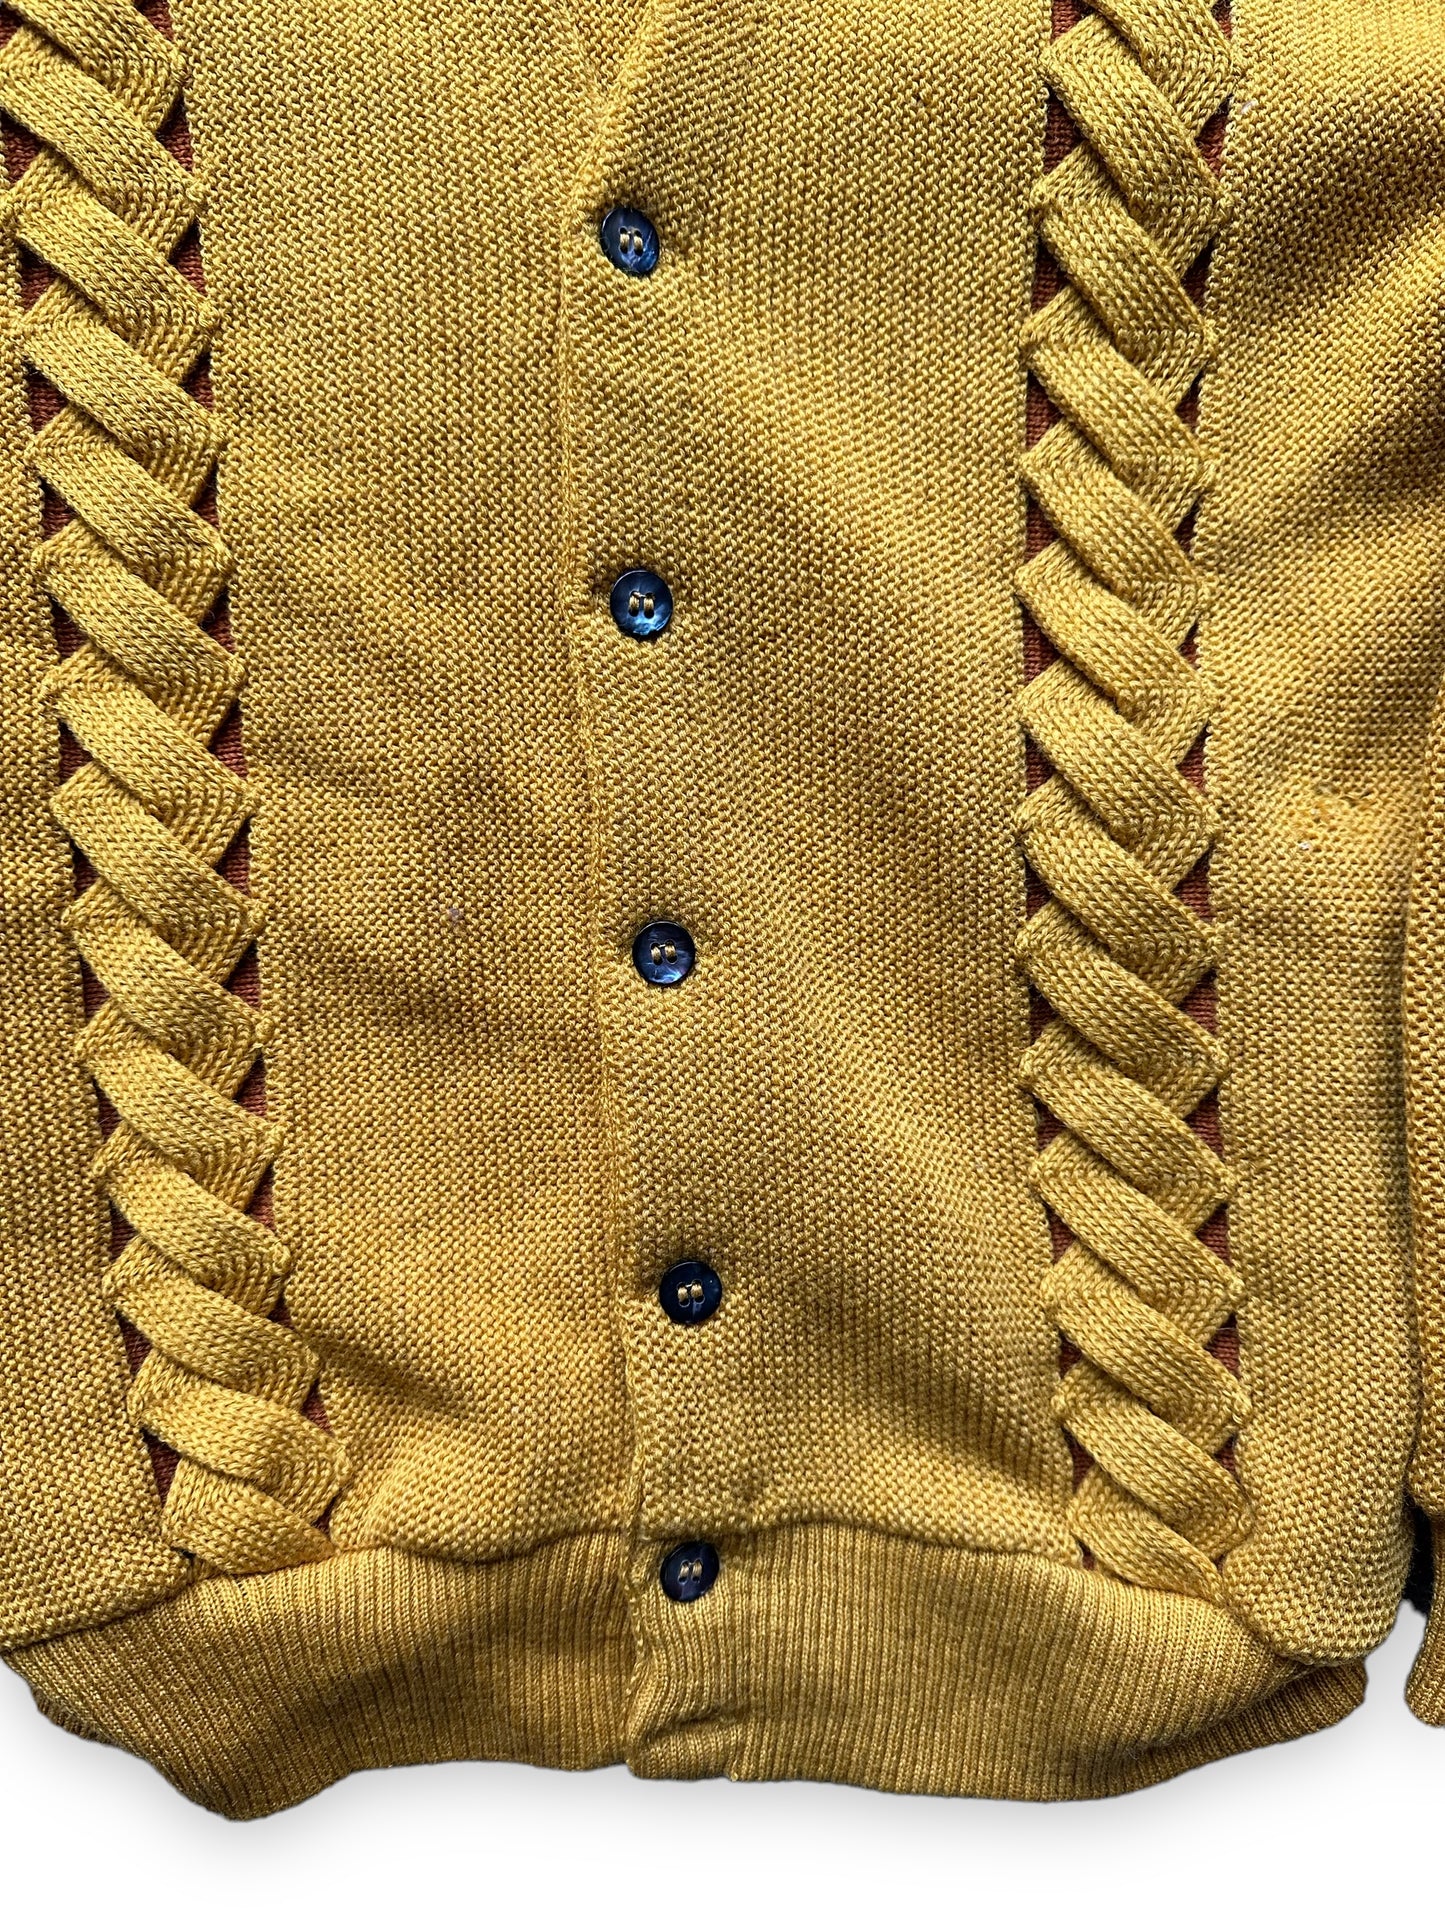 Lower Flat Front View of Vintage Seattle Knitting Mills Golden Double Helix Wool Sweater SZ M |  Vintage Cardigan Sweaters Seattle | Barn Owl Vintage Seattle